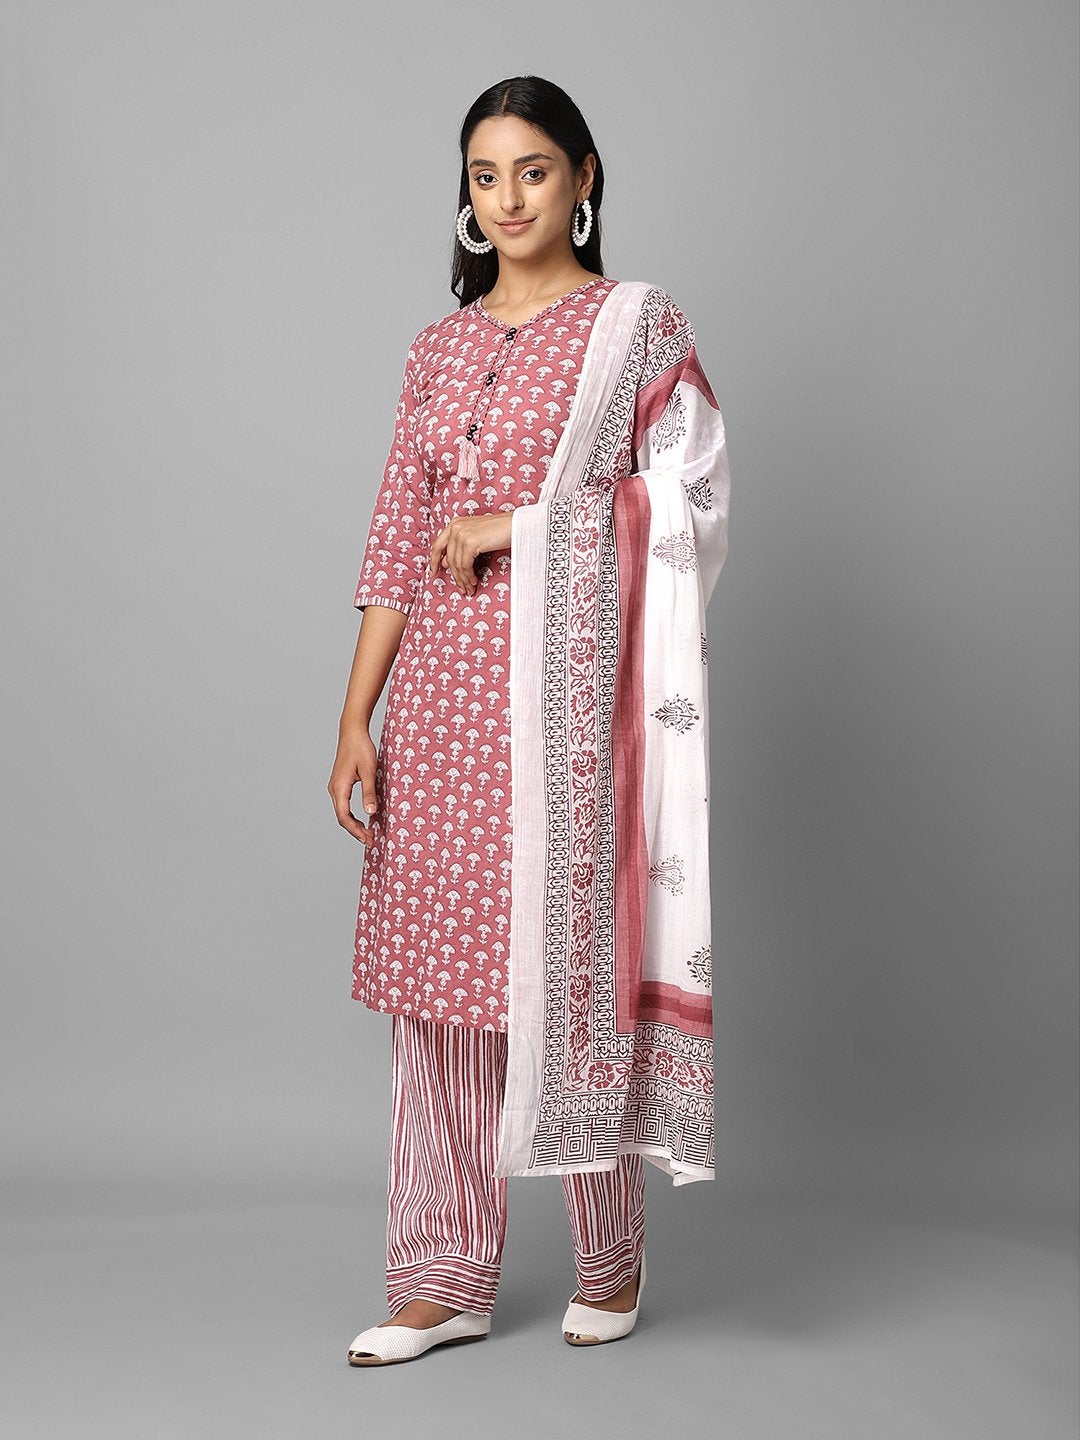 Women's Pink And White Ethnic Printed Side Slit Straight Kurta Palazzo And Dupatta Set - Azira